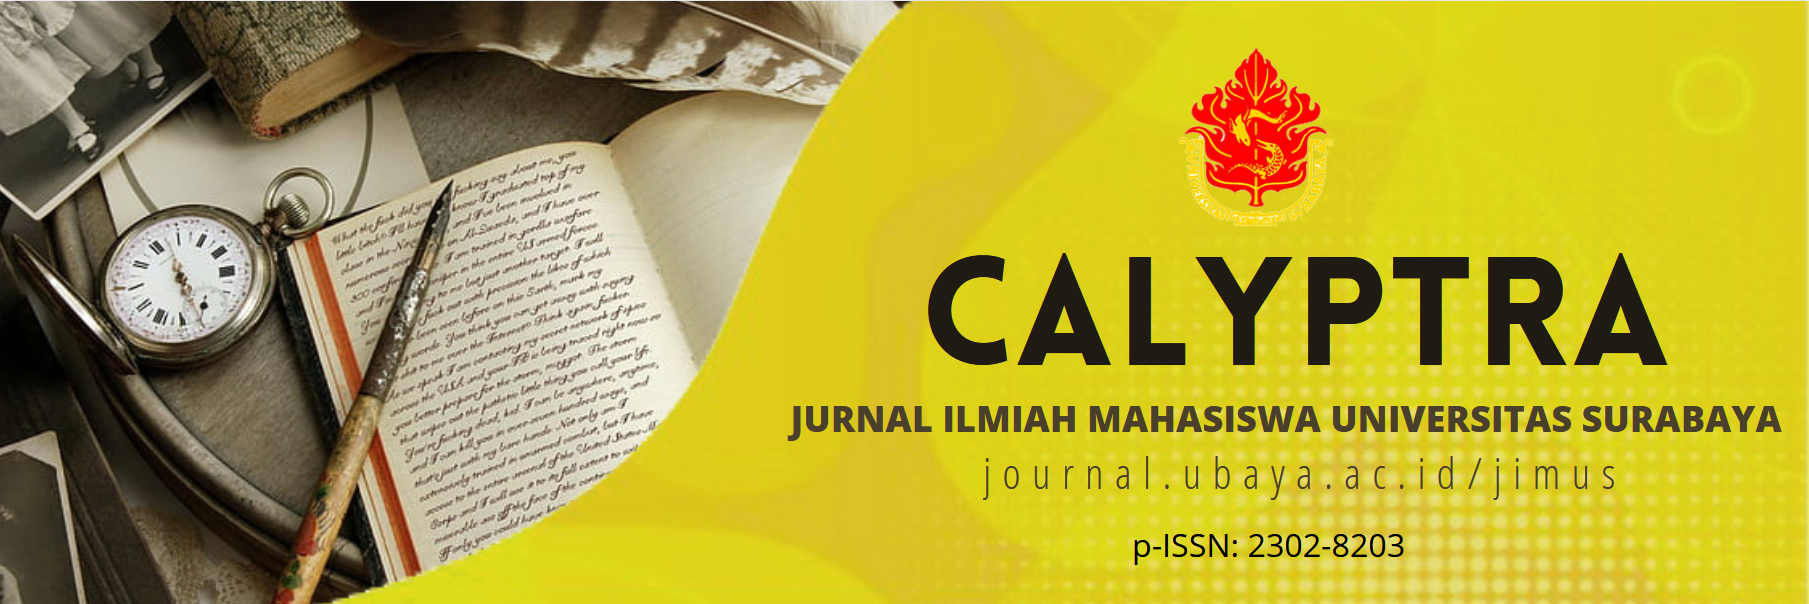 jurnal calyptra header